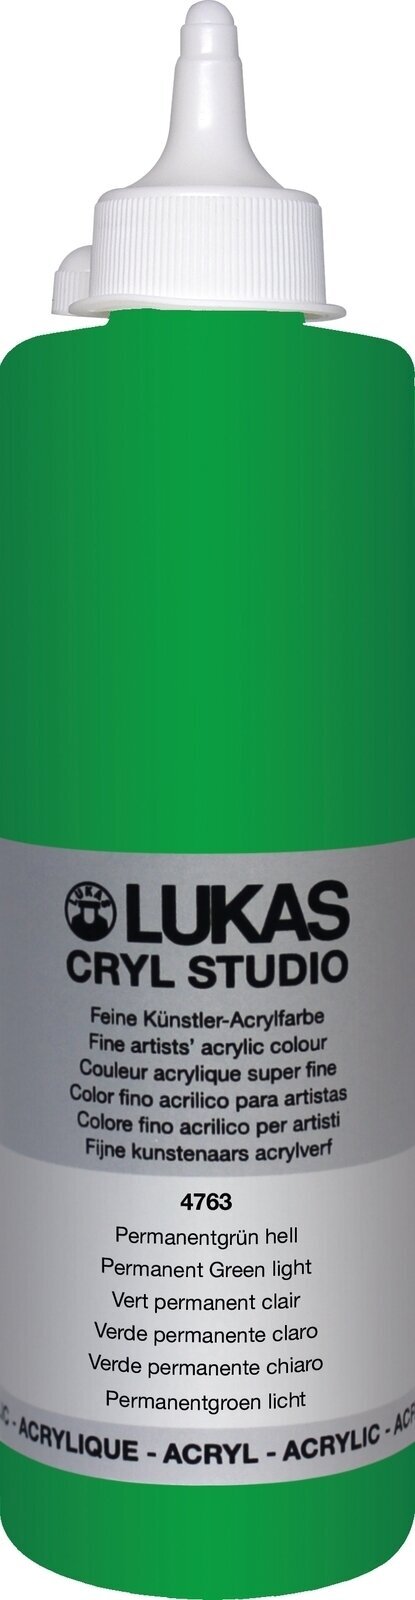 Tinta acrílica Lukas Cryl Studio Tinta acrílica 500 ml Permanent Green Light